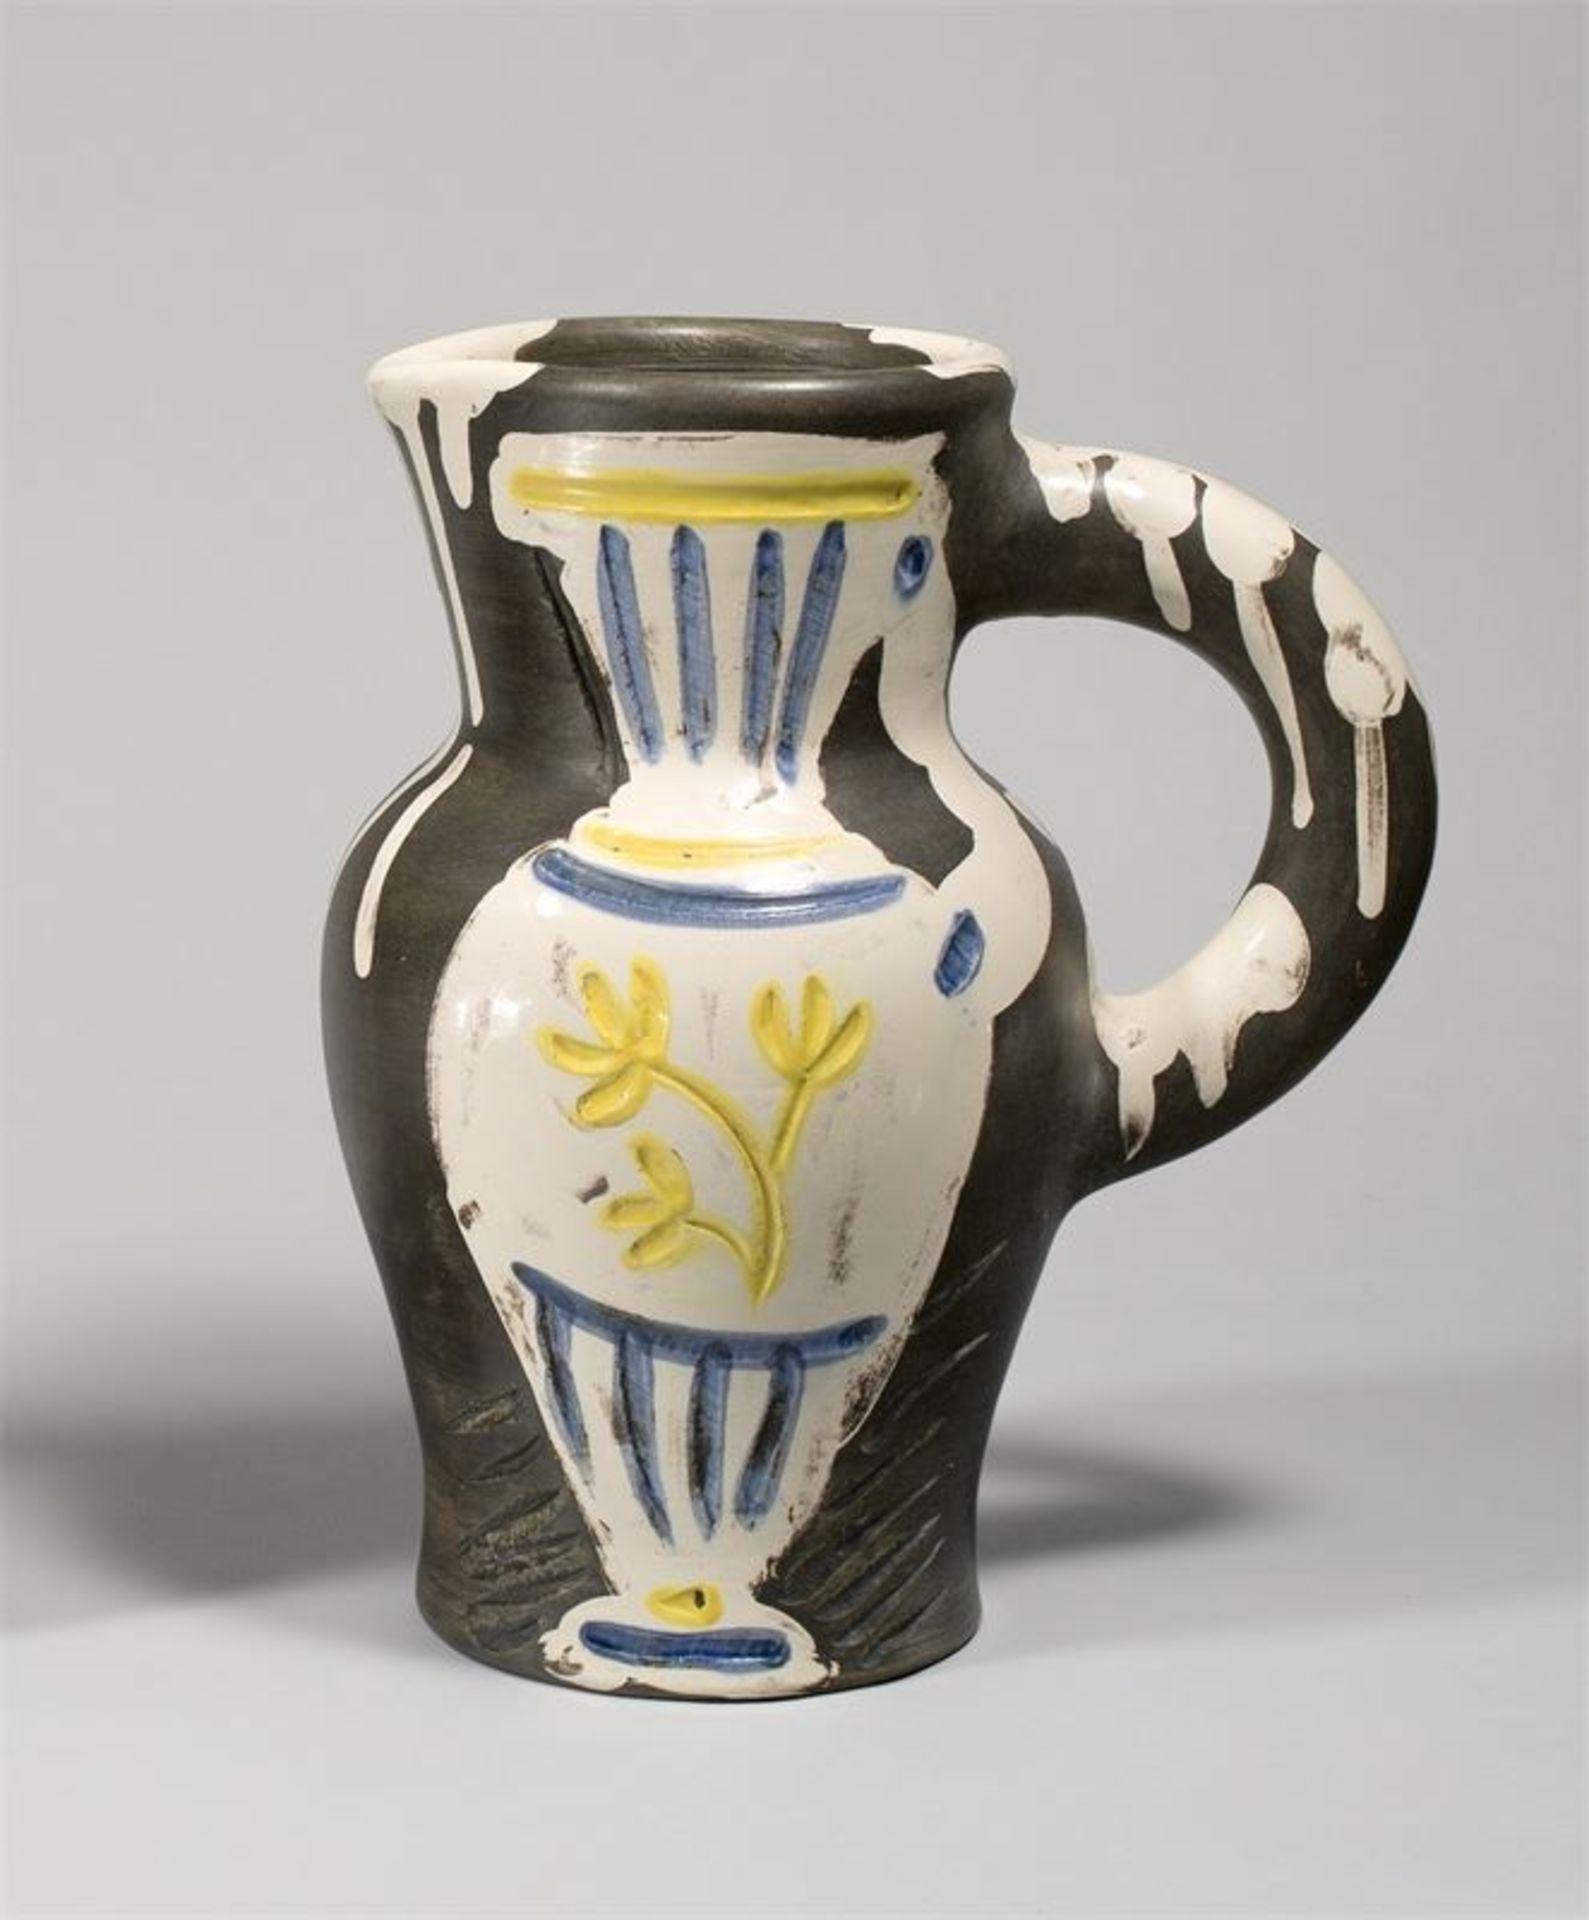 Pablo Picasso (Málaga 1881 – 1973 Mougins) - „Pichet au vase“. 1954 - Krug, [...] - Image 2 of 2